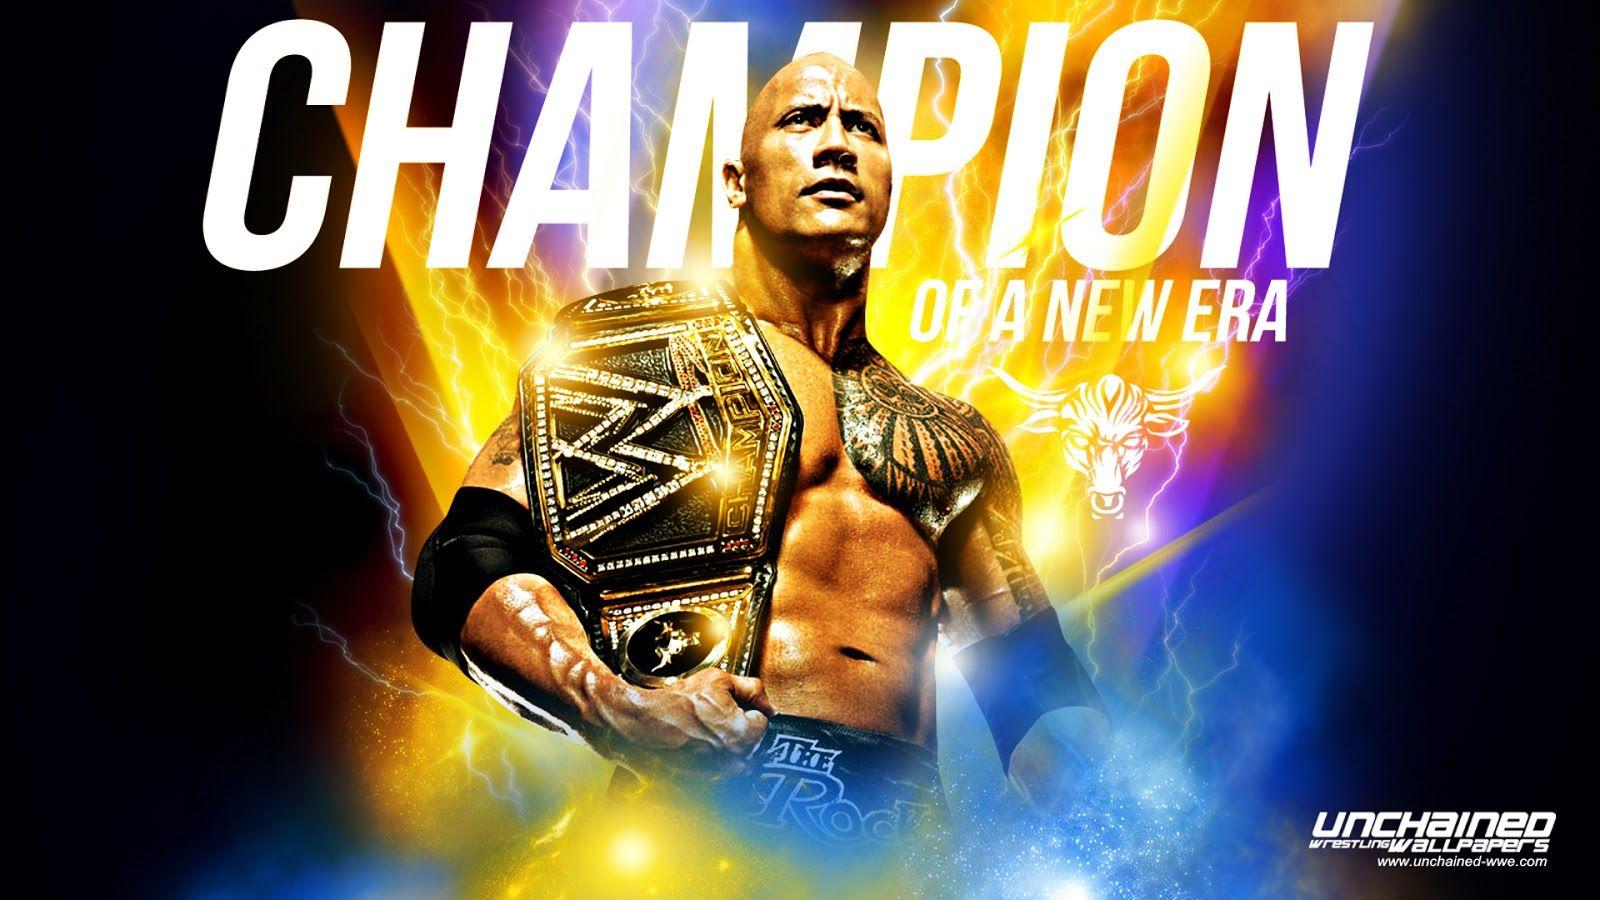 WWE Wrestler The Rock Wallpaper. Beautiful image HD Picture